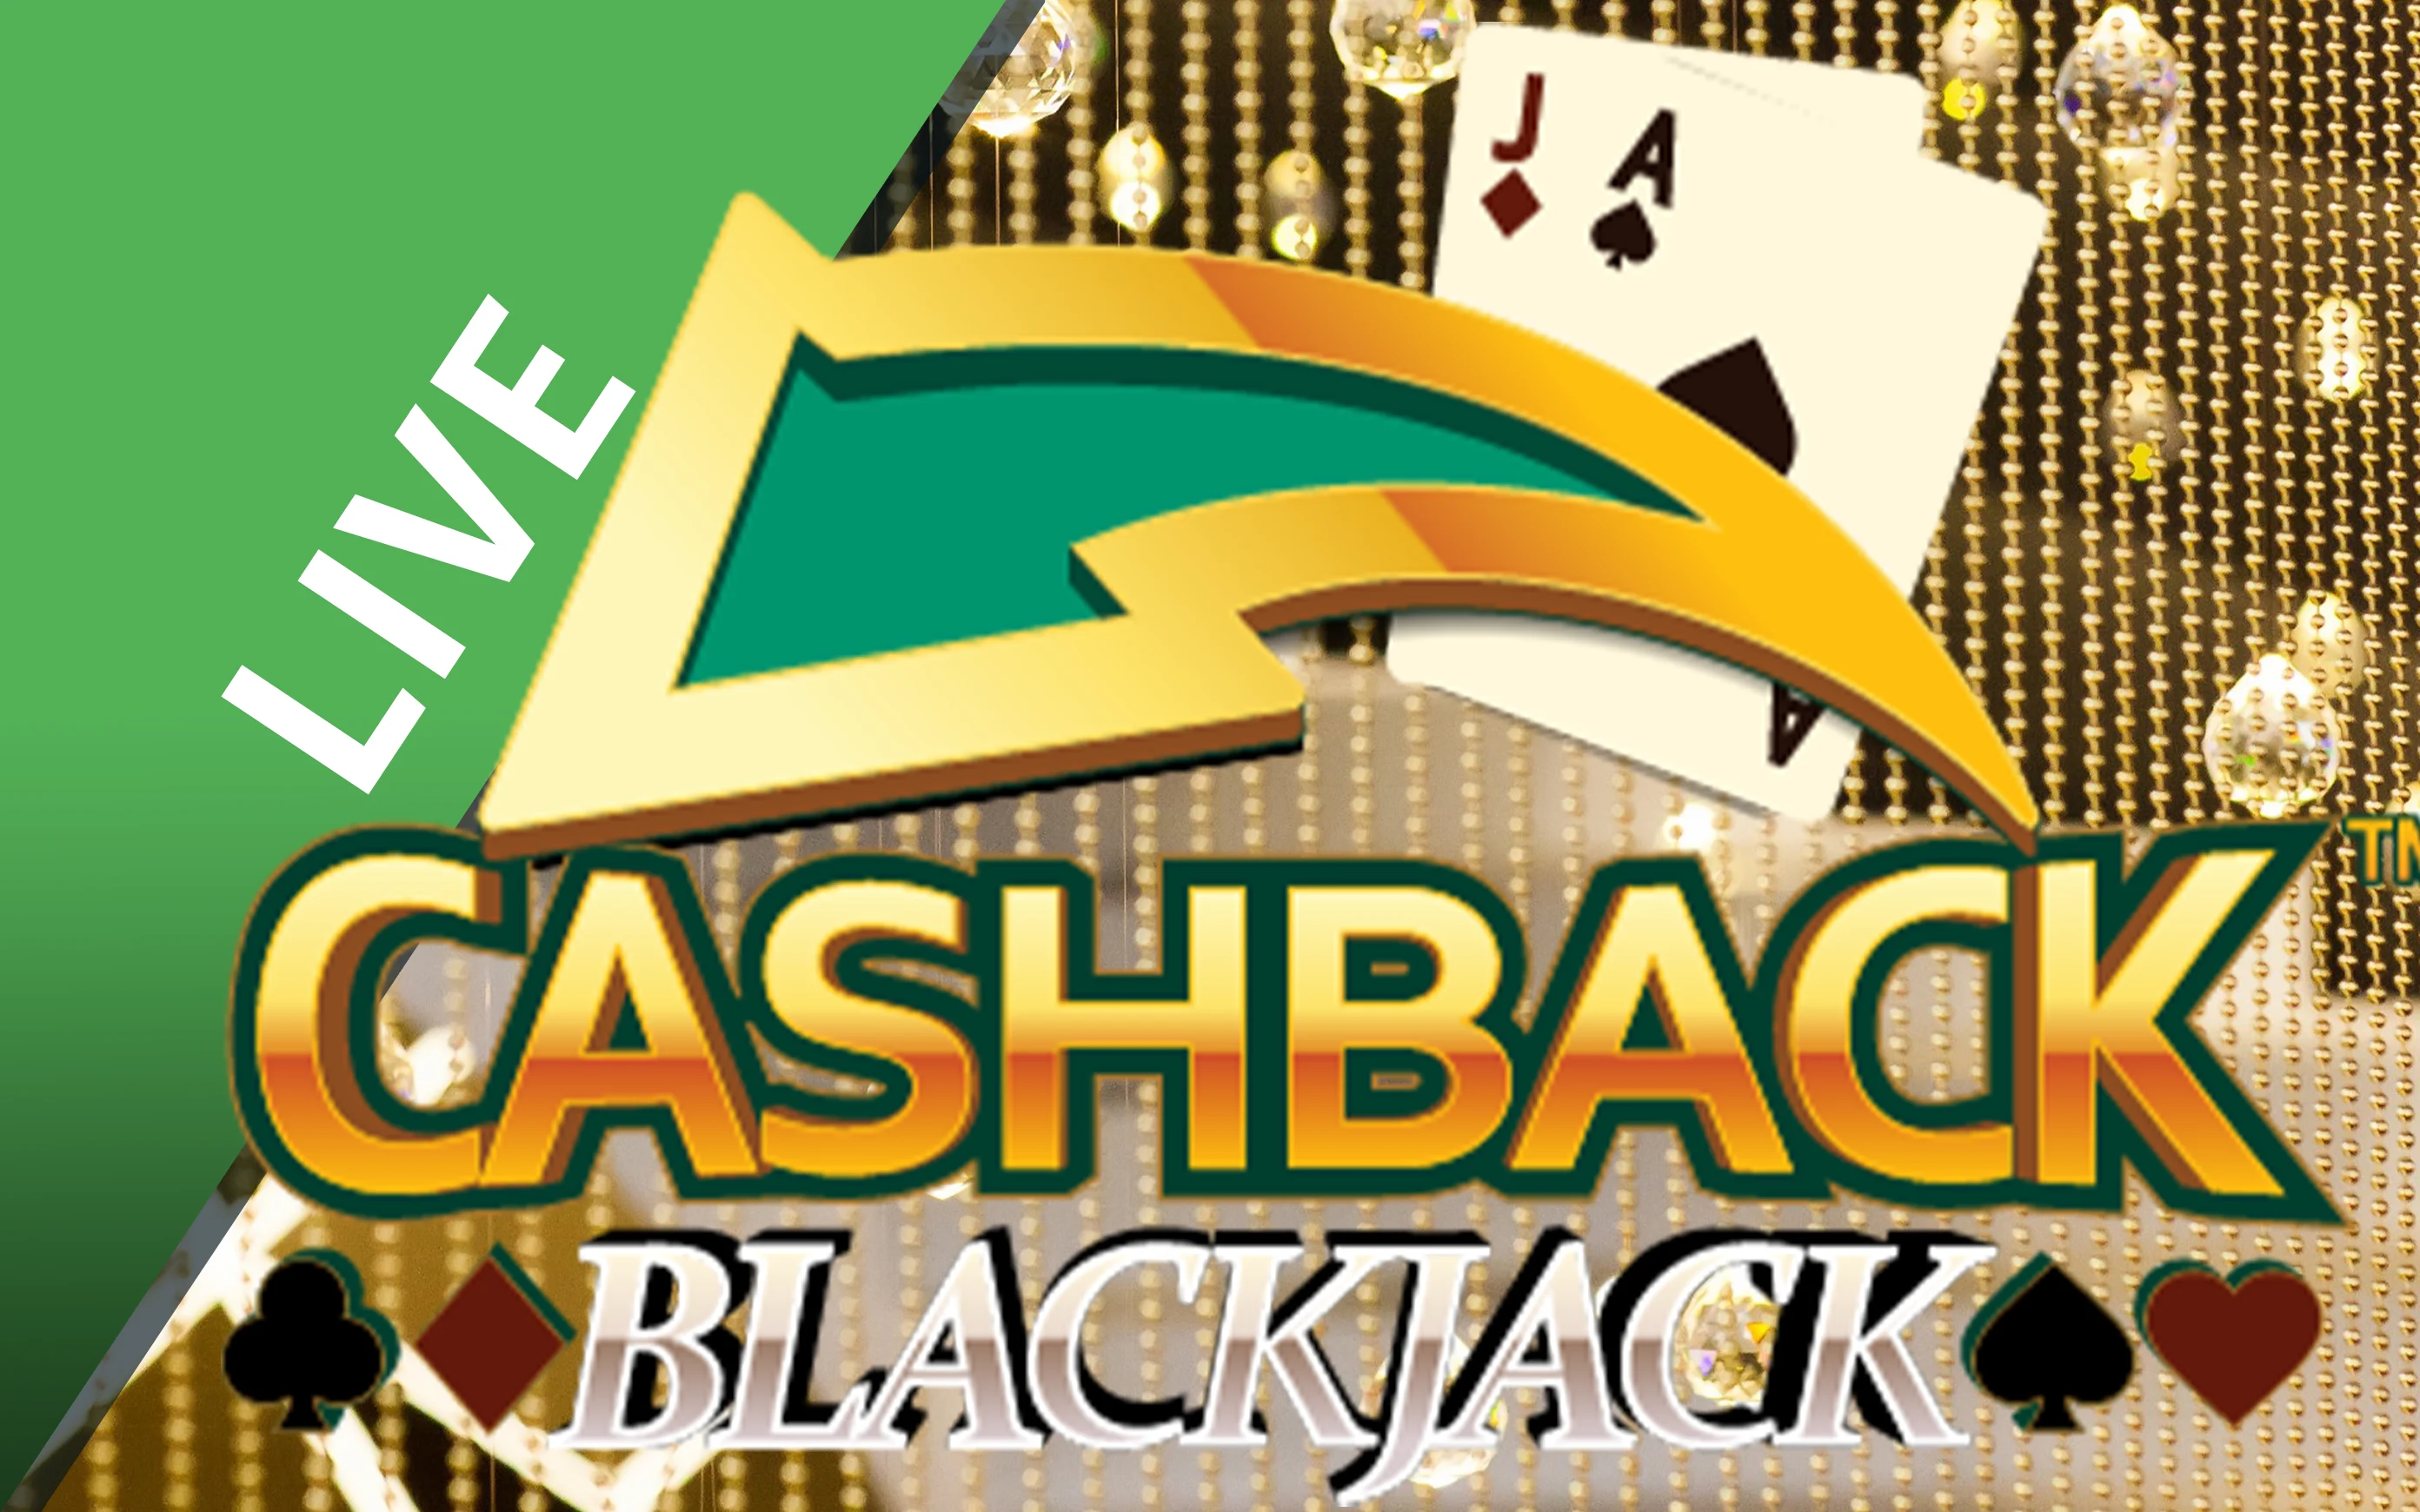 Play Grand Royale Cashback Blackjack on Starcasino.be online casino